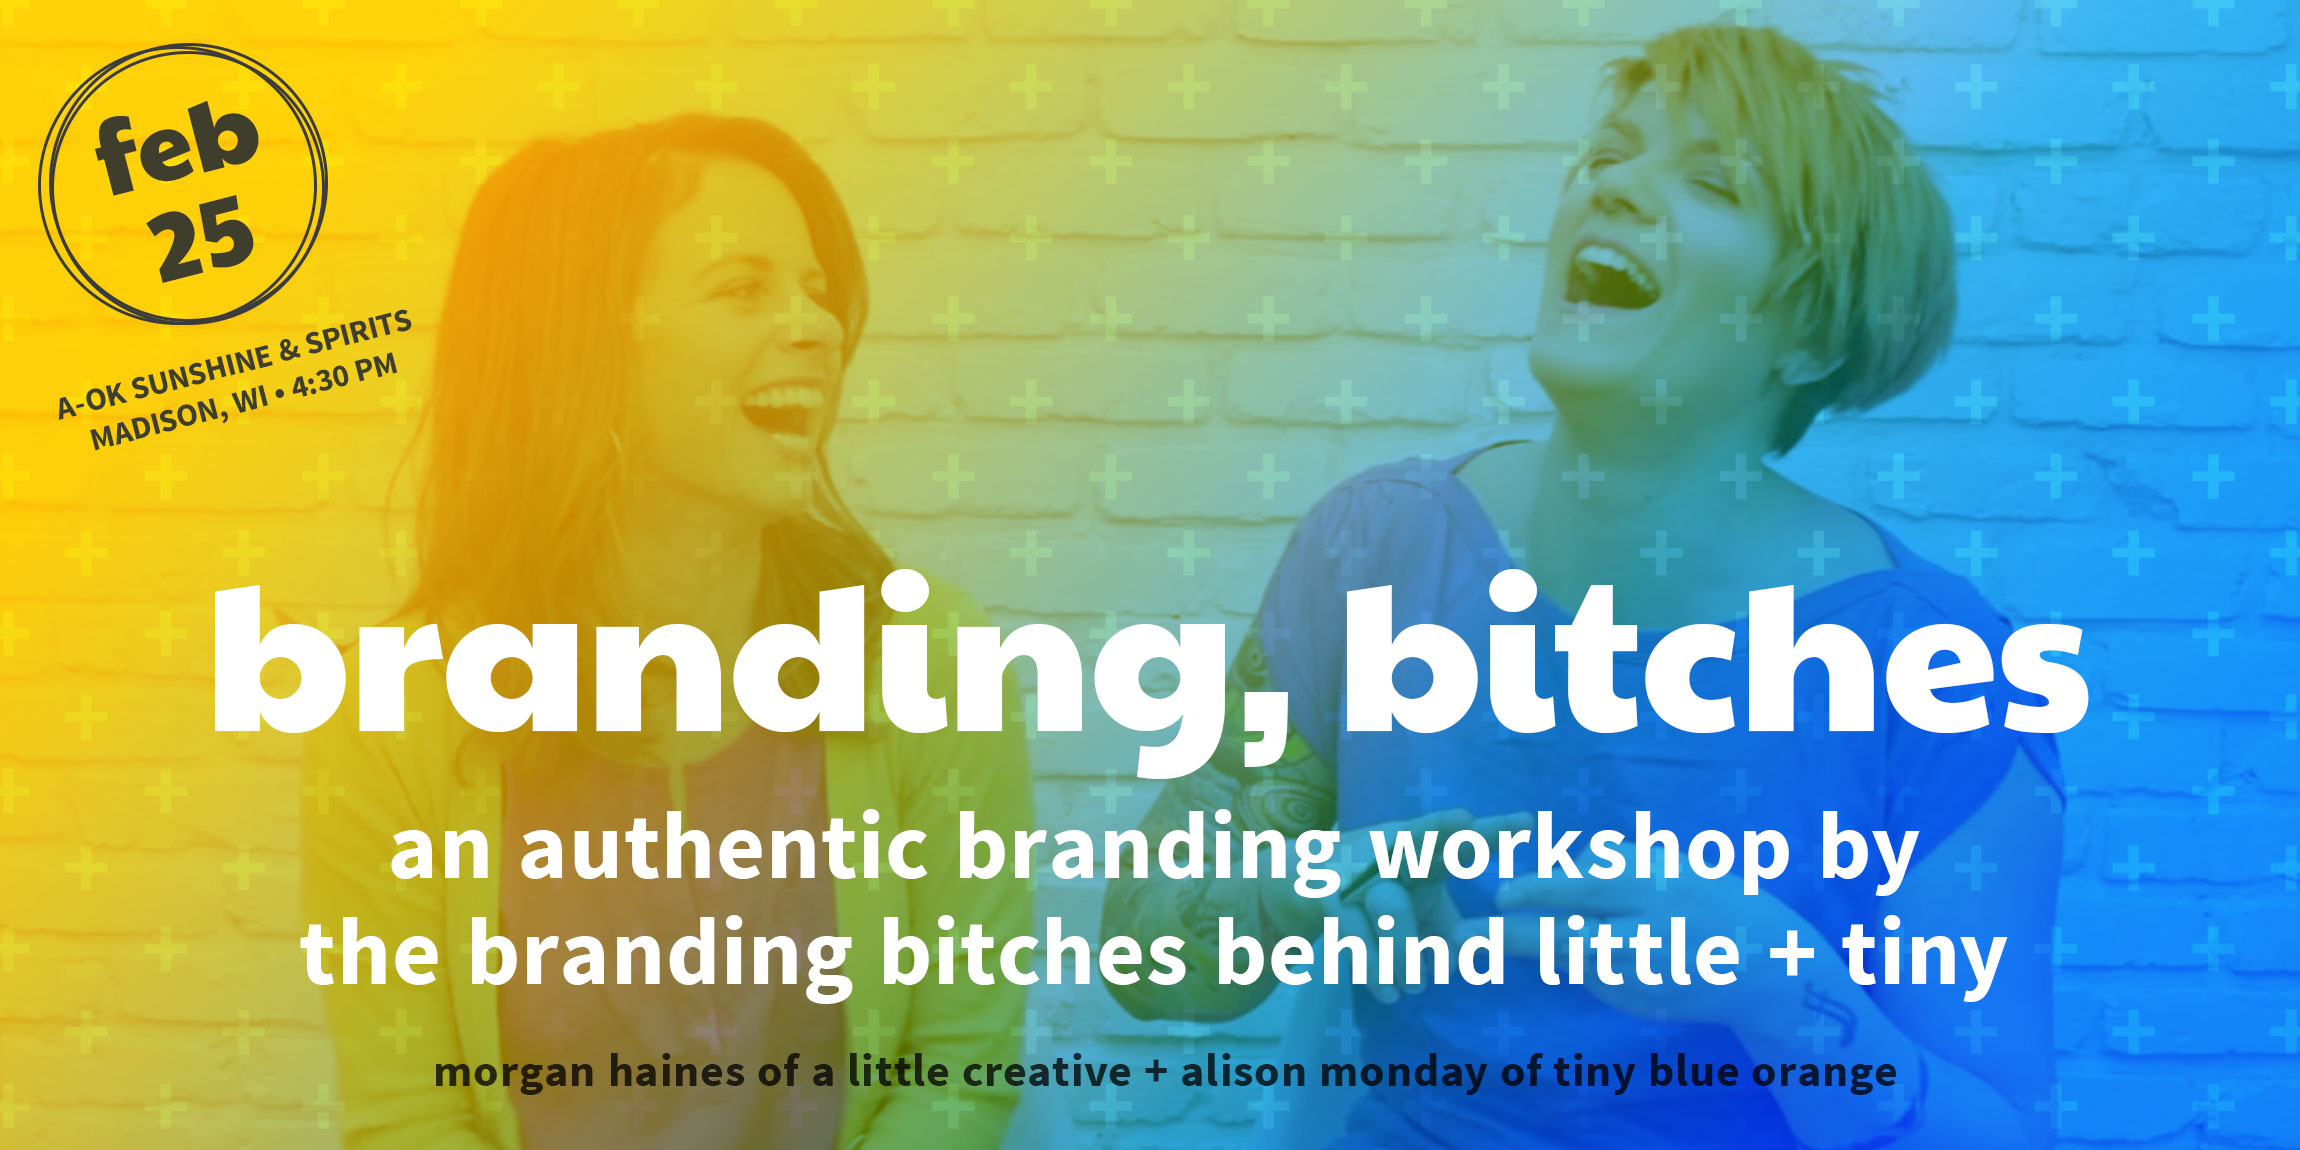 branding, bitches: authentic branding workshop